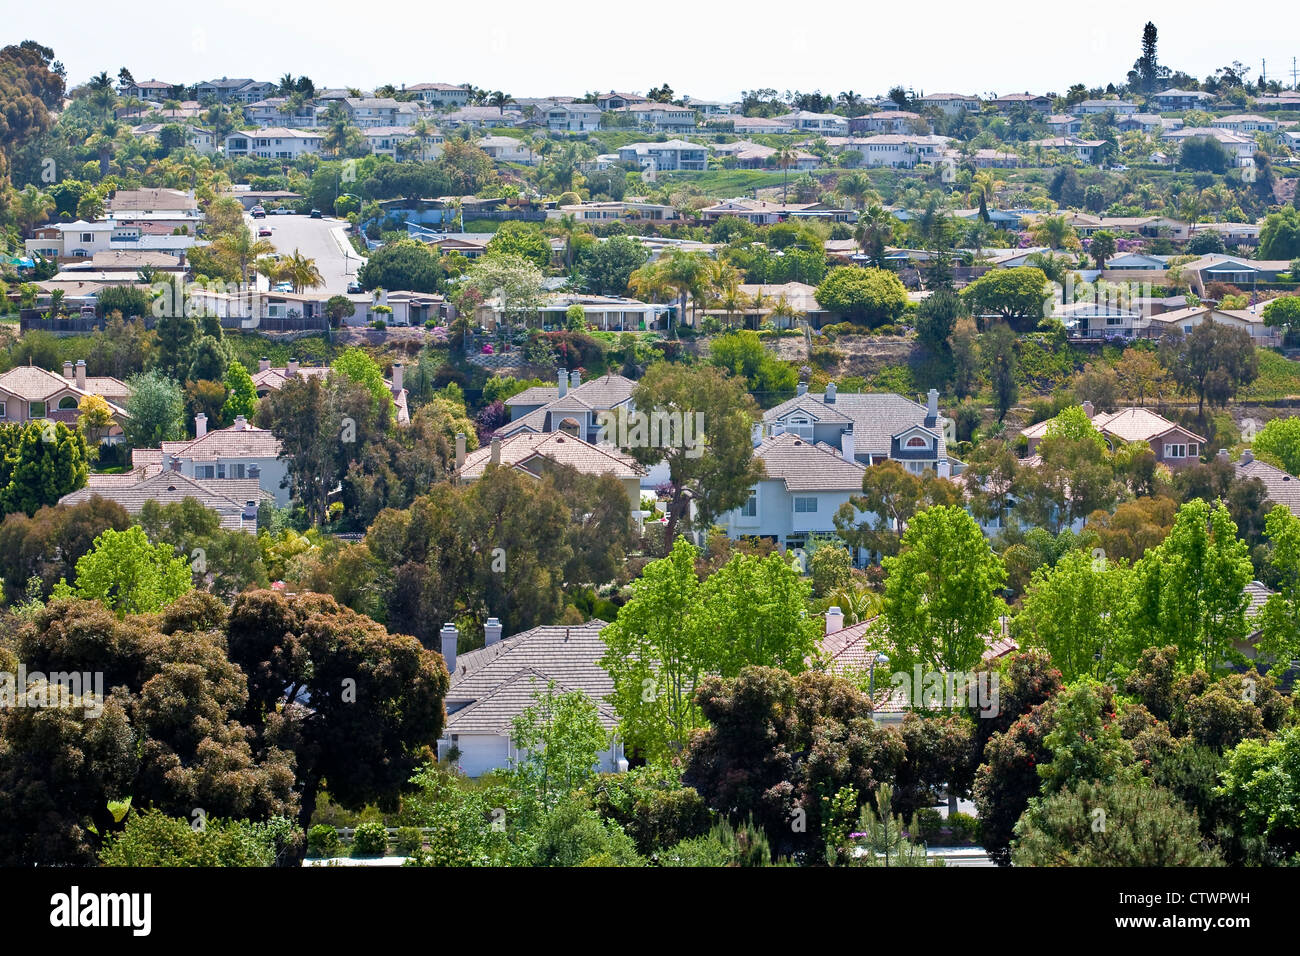 Subsurban sprawl houses on hillside in Encinitas, CA US. Stock Photo